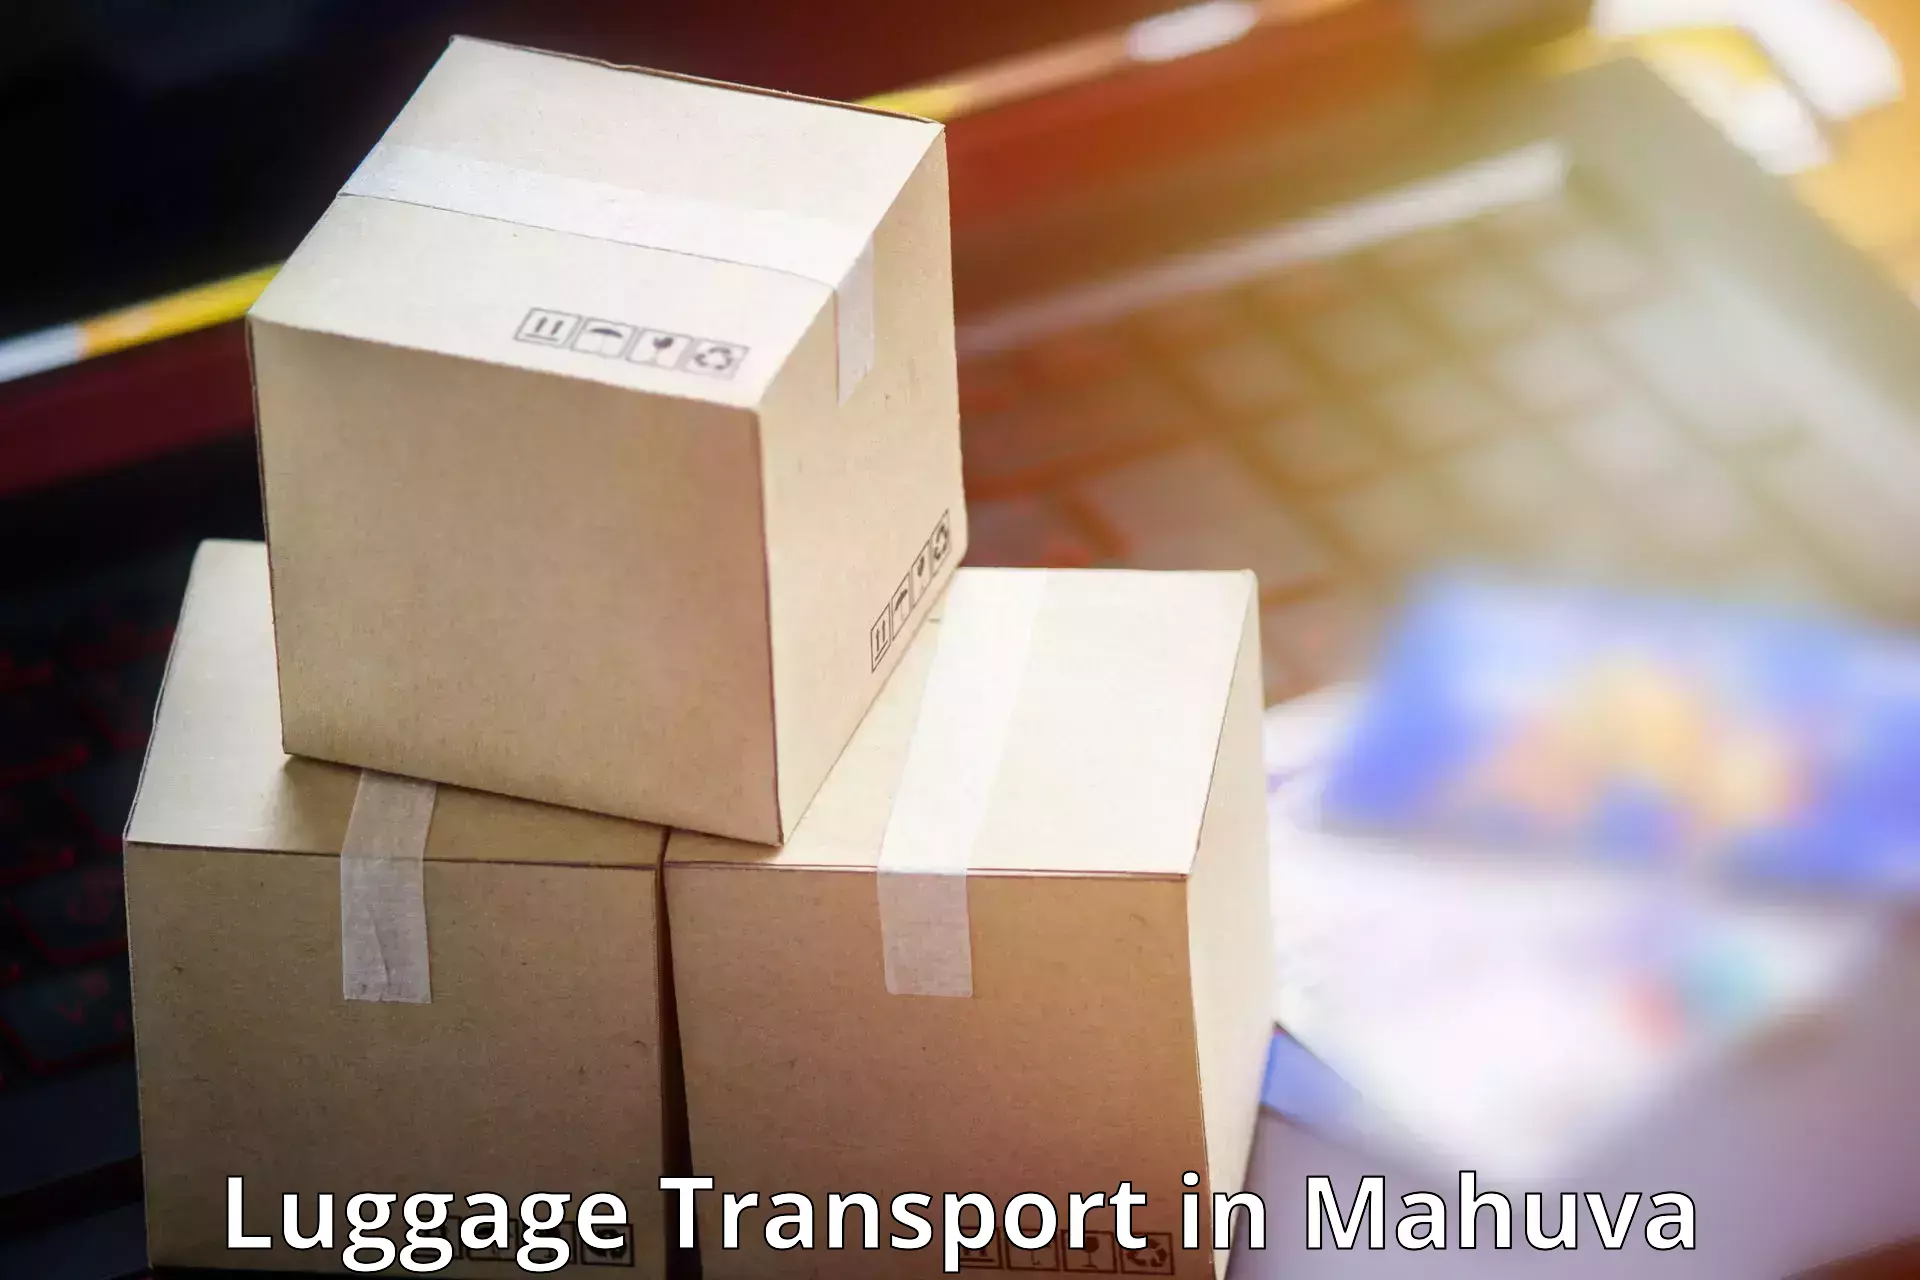 Business luggage transport in Mahuva